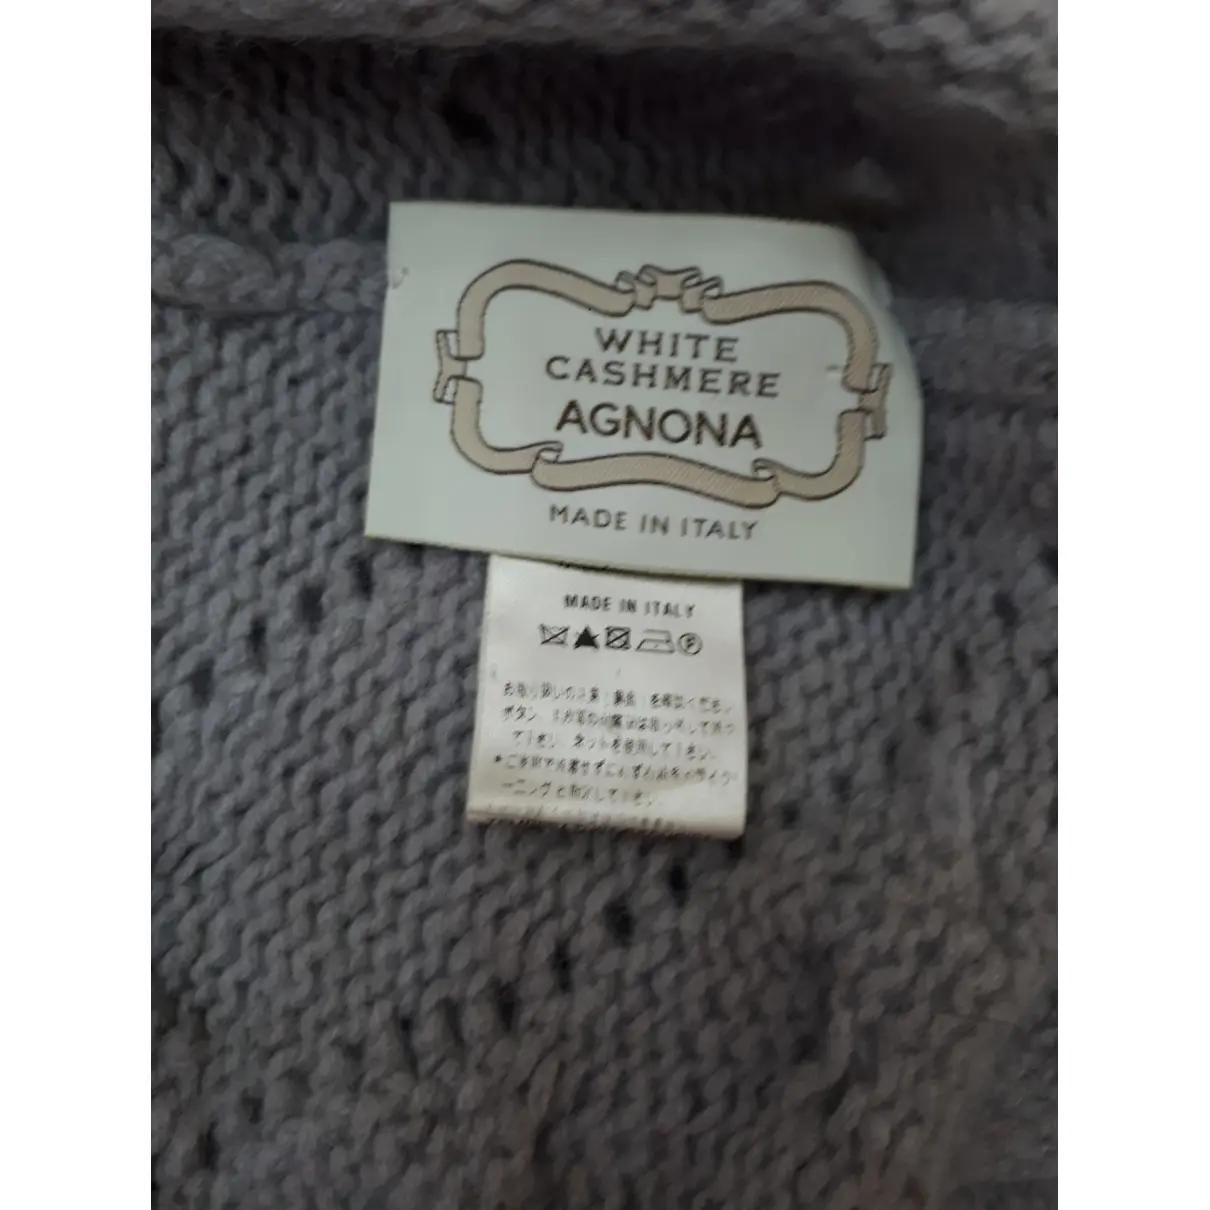 Buy Agnona Cashmere cardigan online